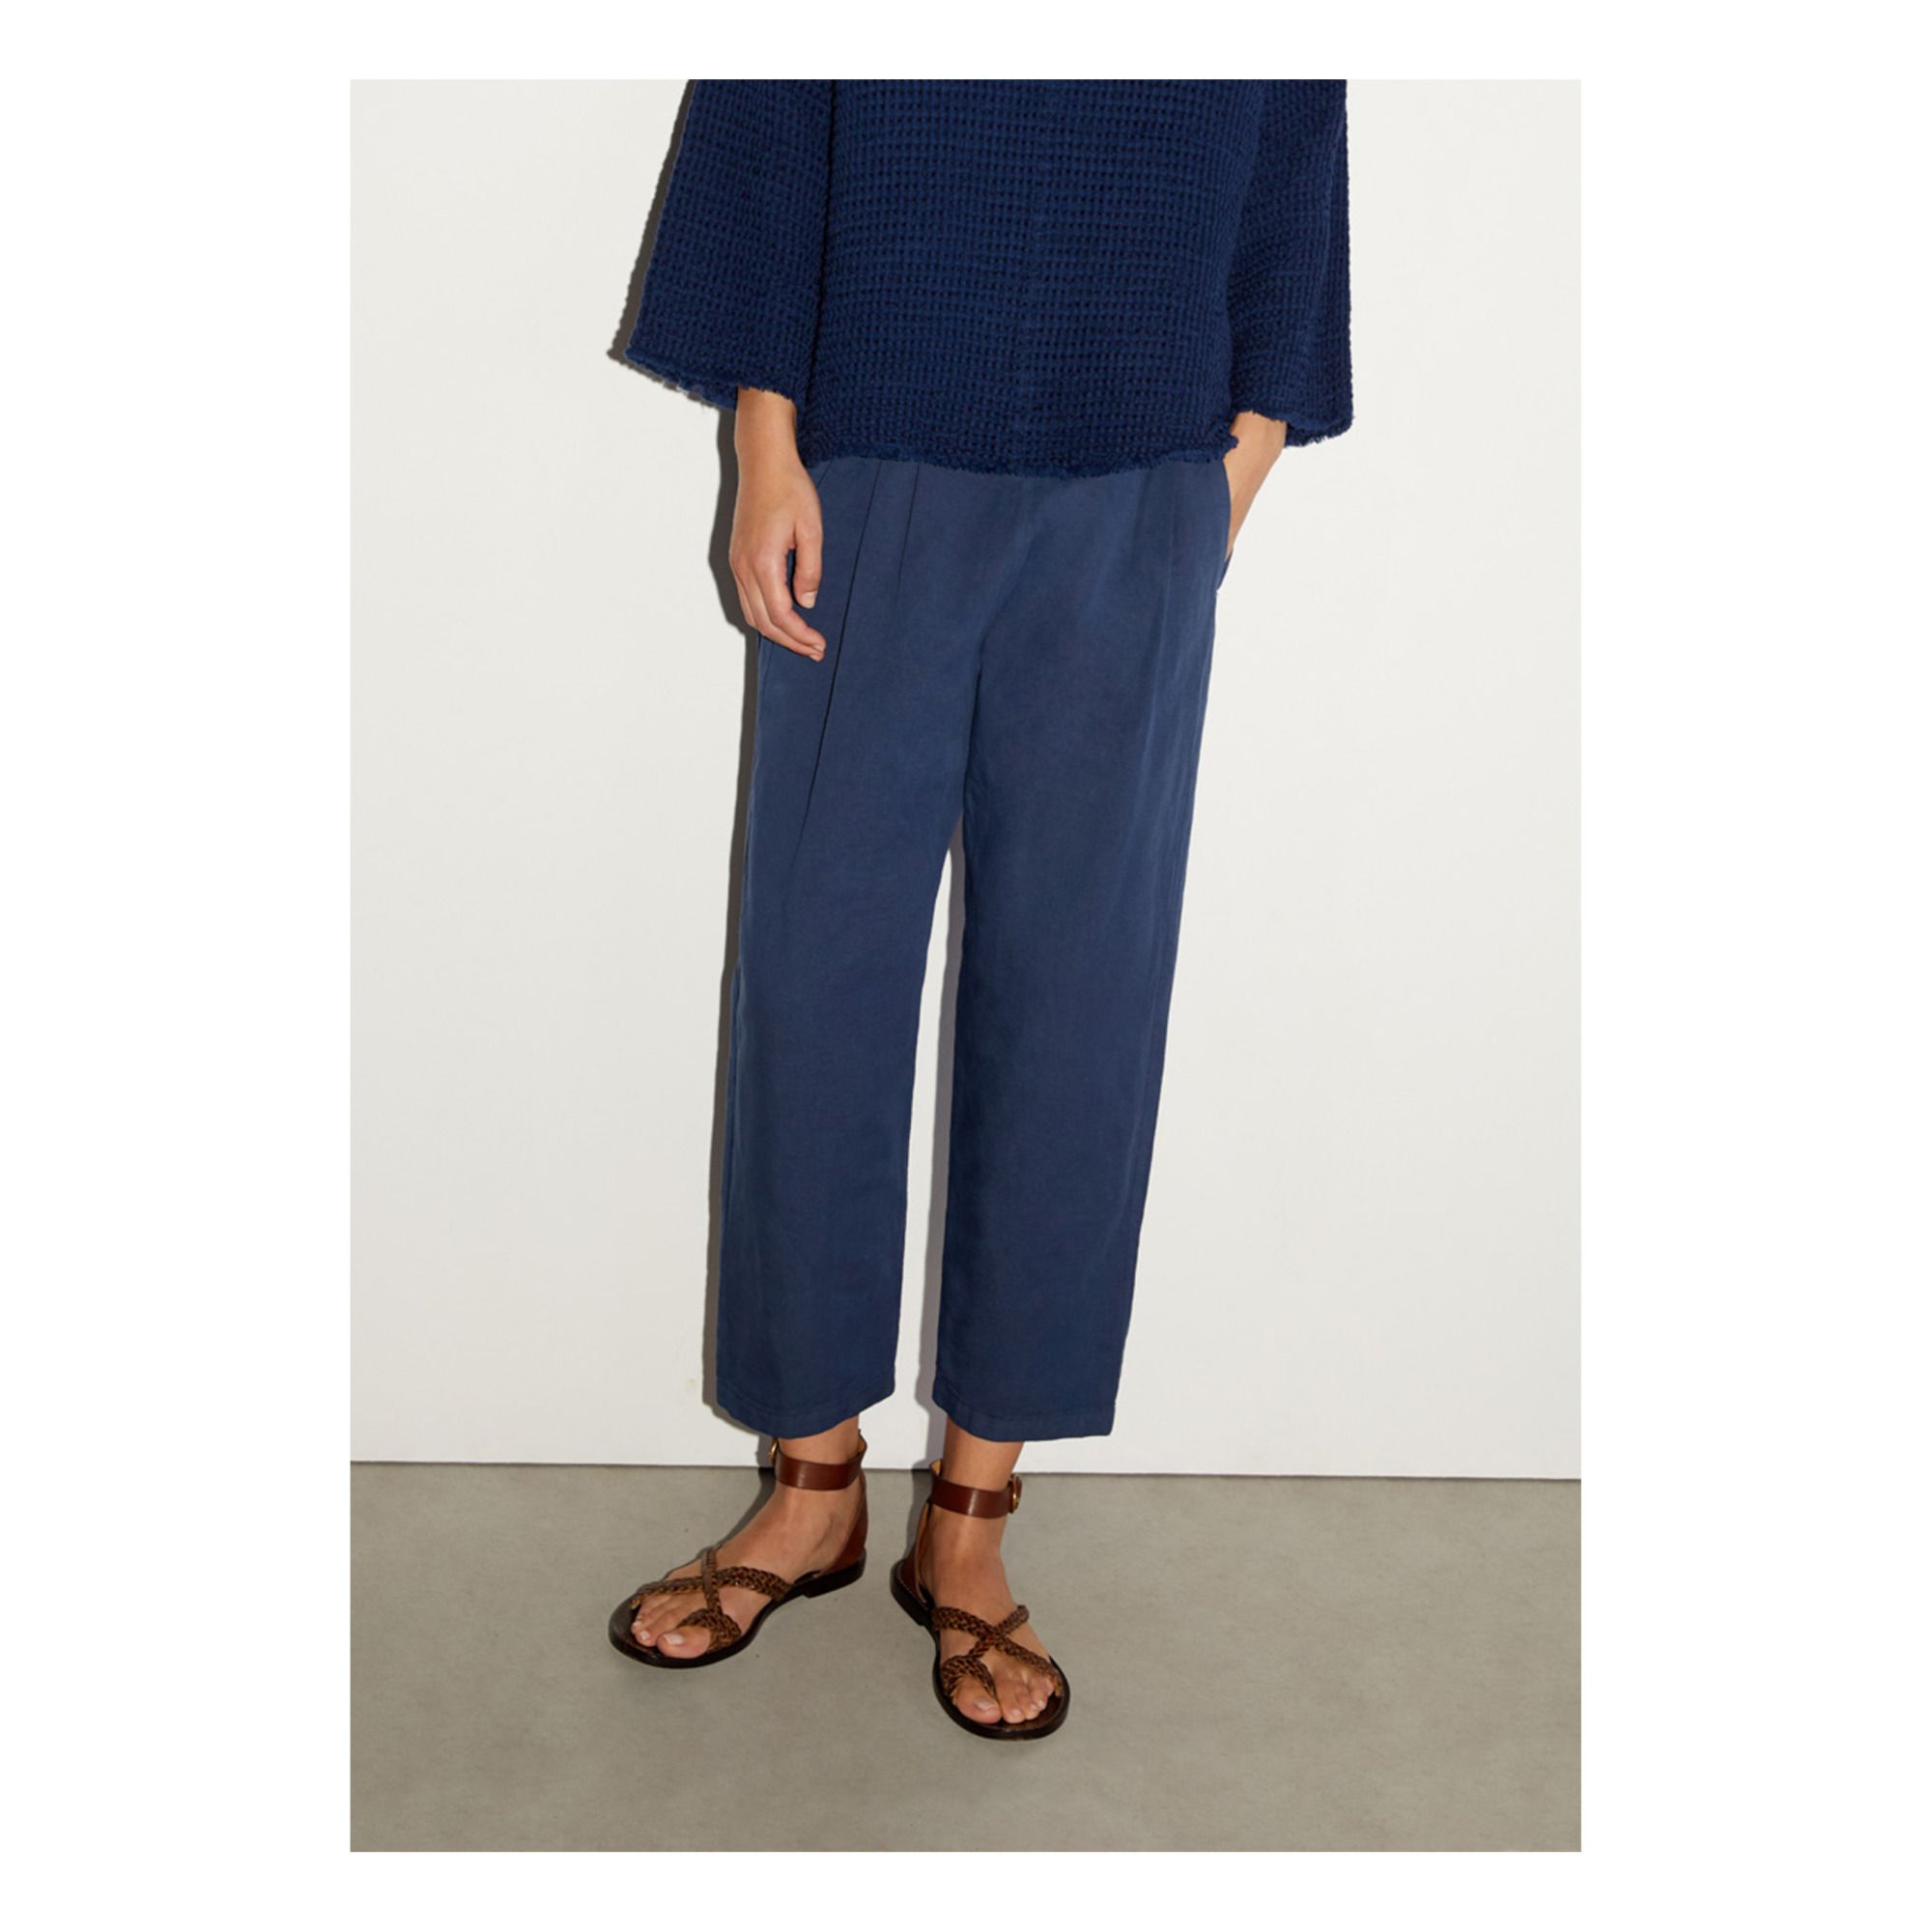 Masscob - Pantalon Tome Coton et Lin - Bleu marine | Smallable